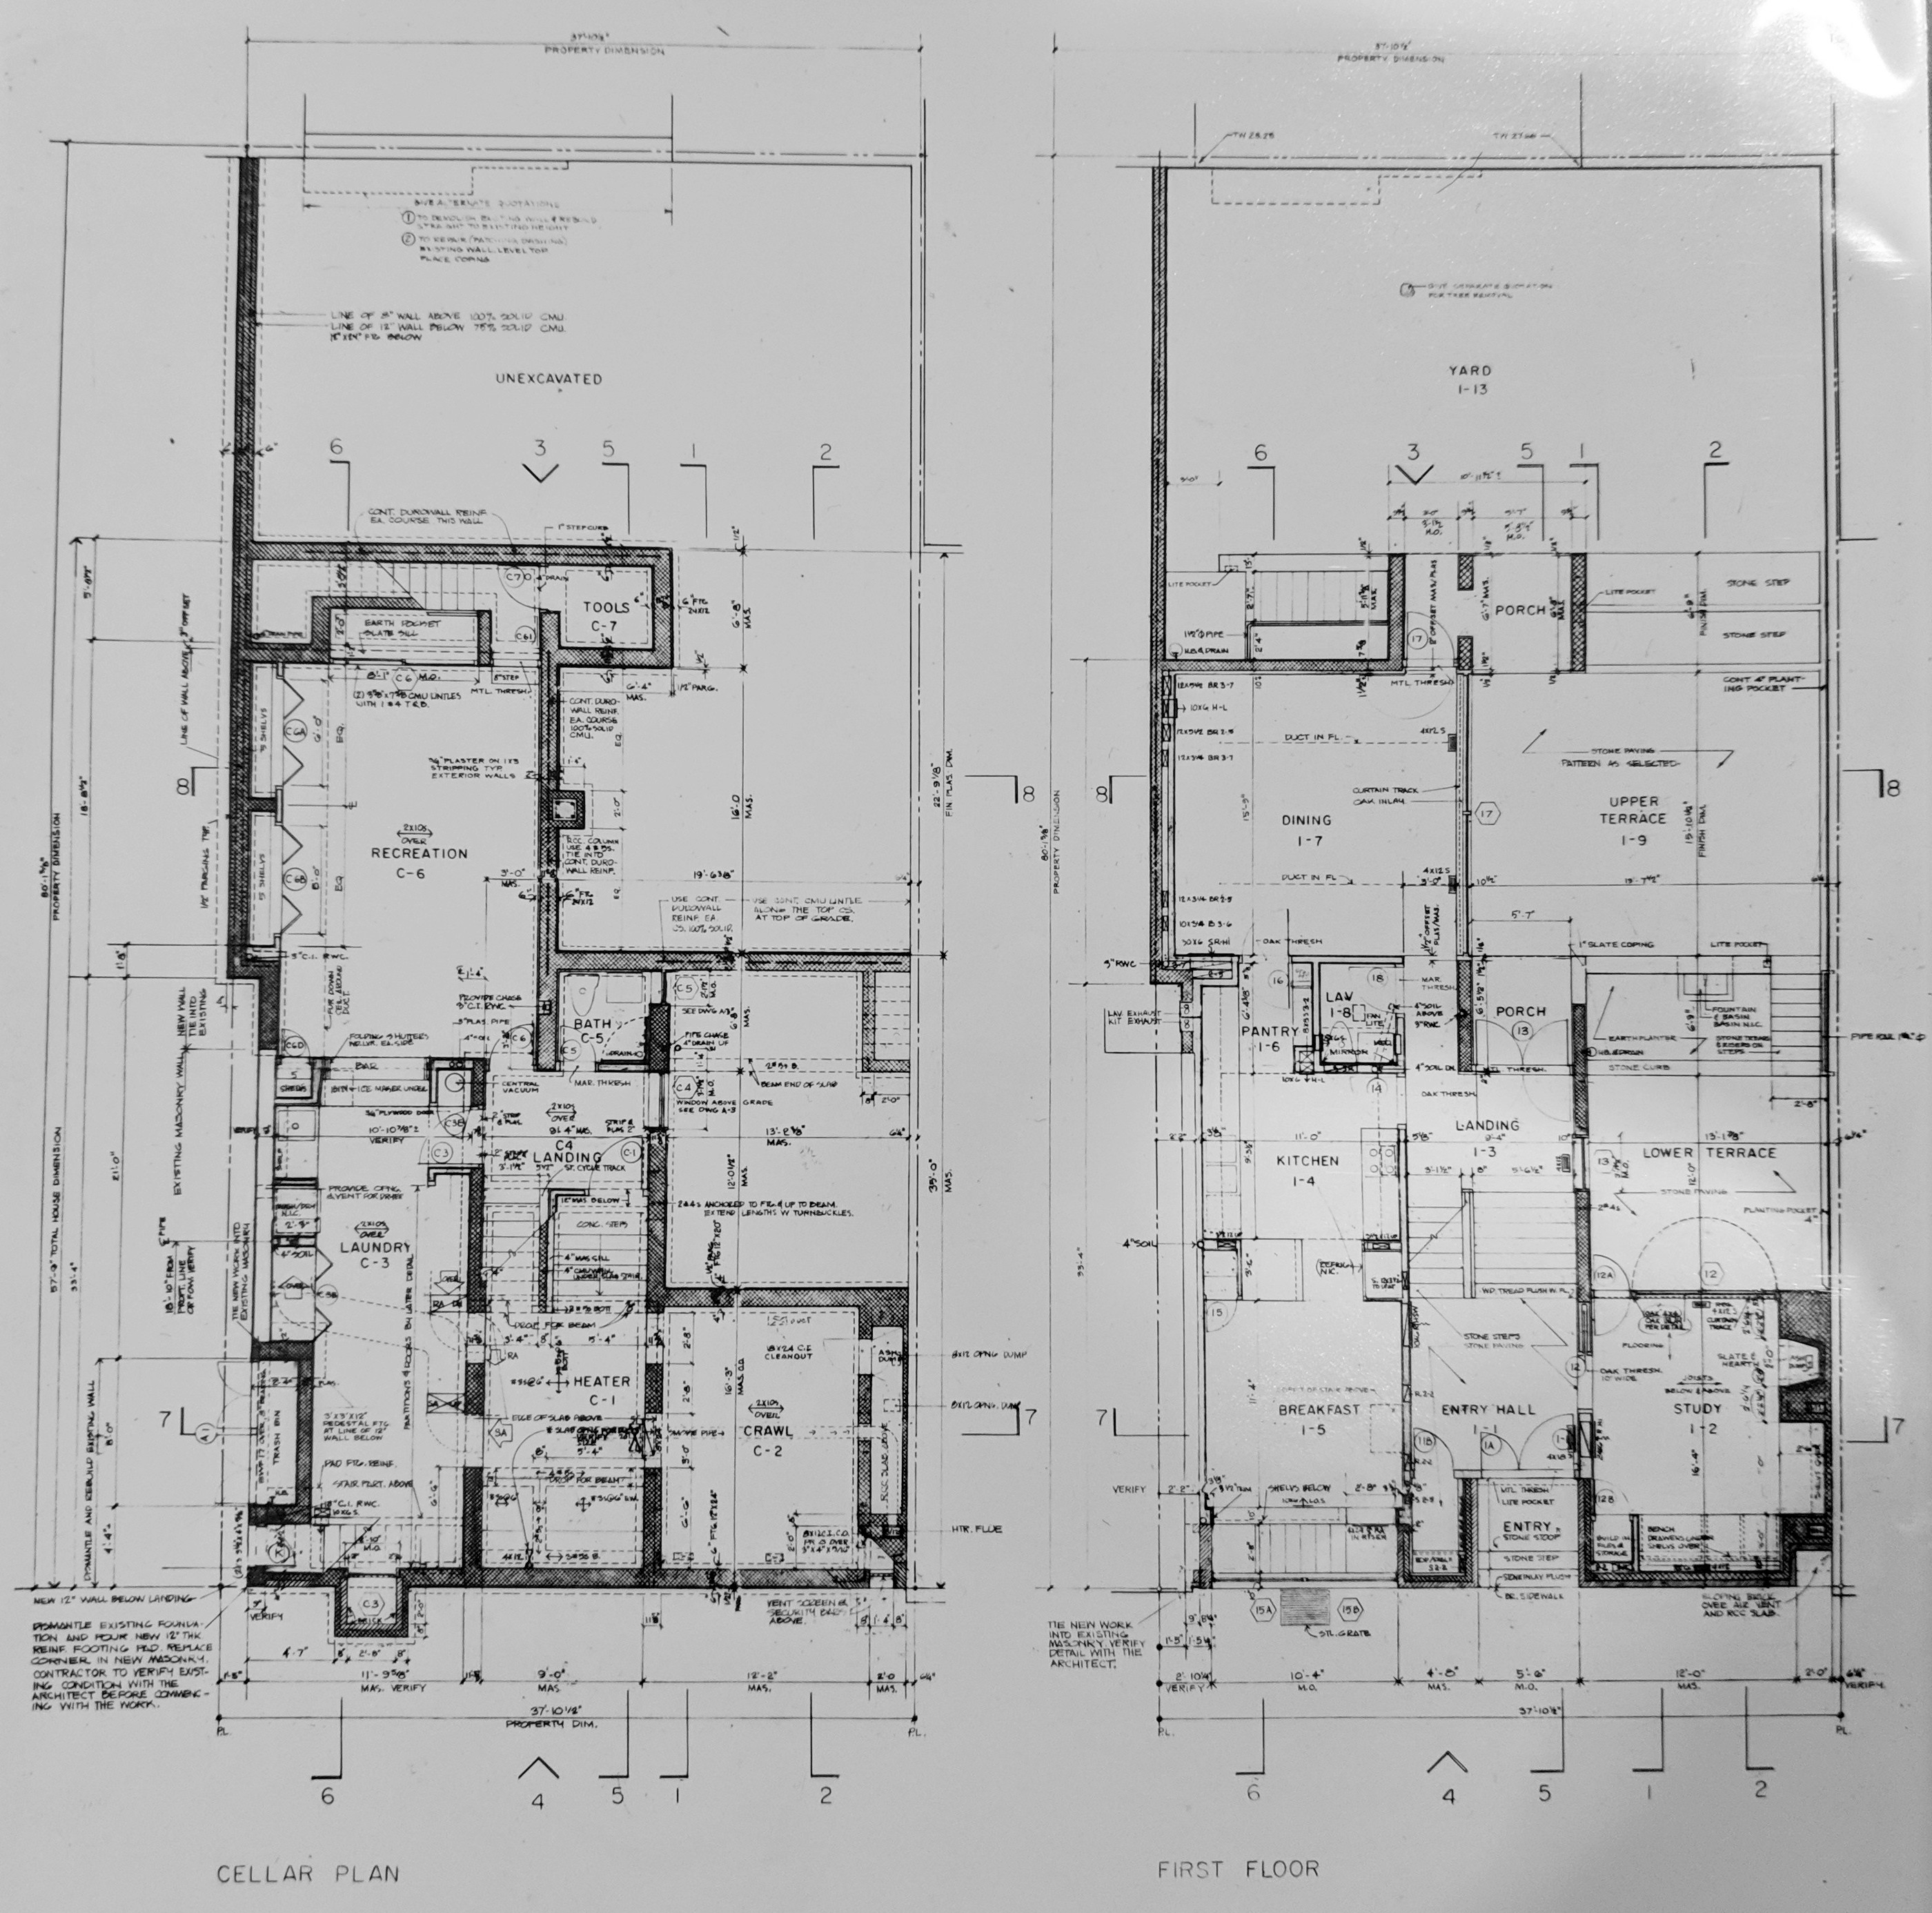 <p>228-230 Delancey Street - Cellar and 1st floor plans</p>
